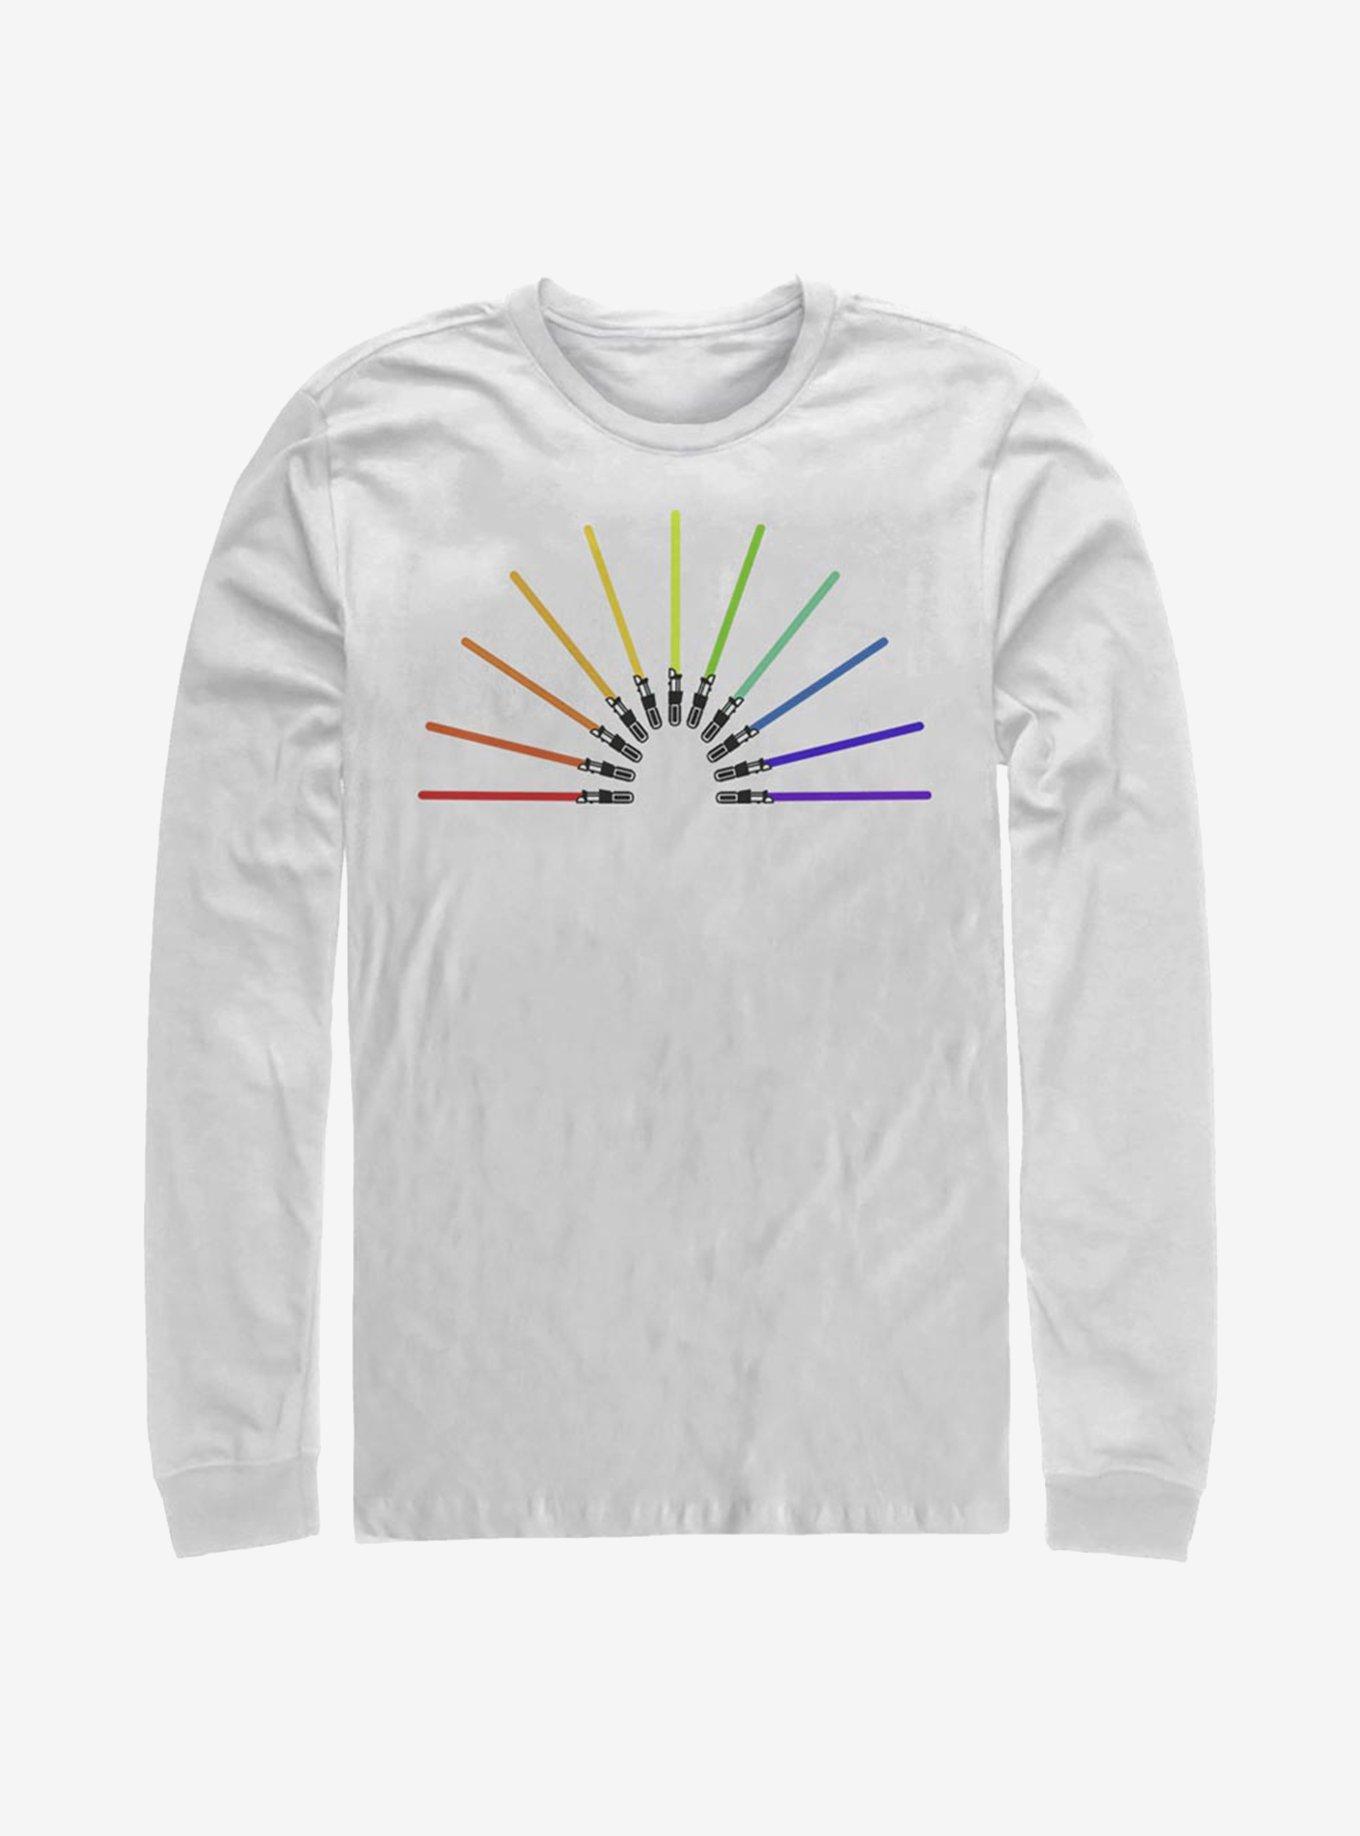 Star Wars Sabor Rainbow Long-Sleeve T-Shirt